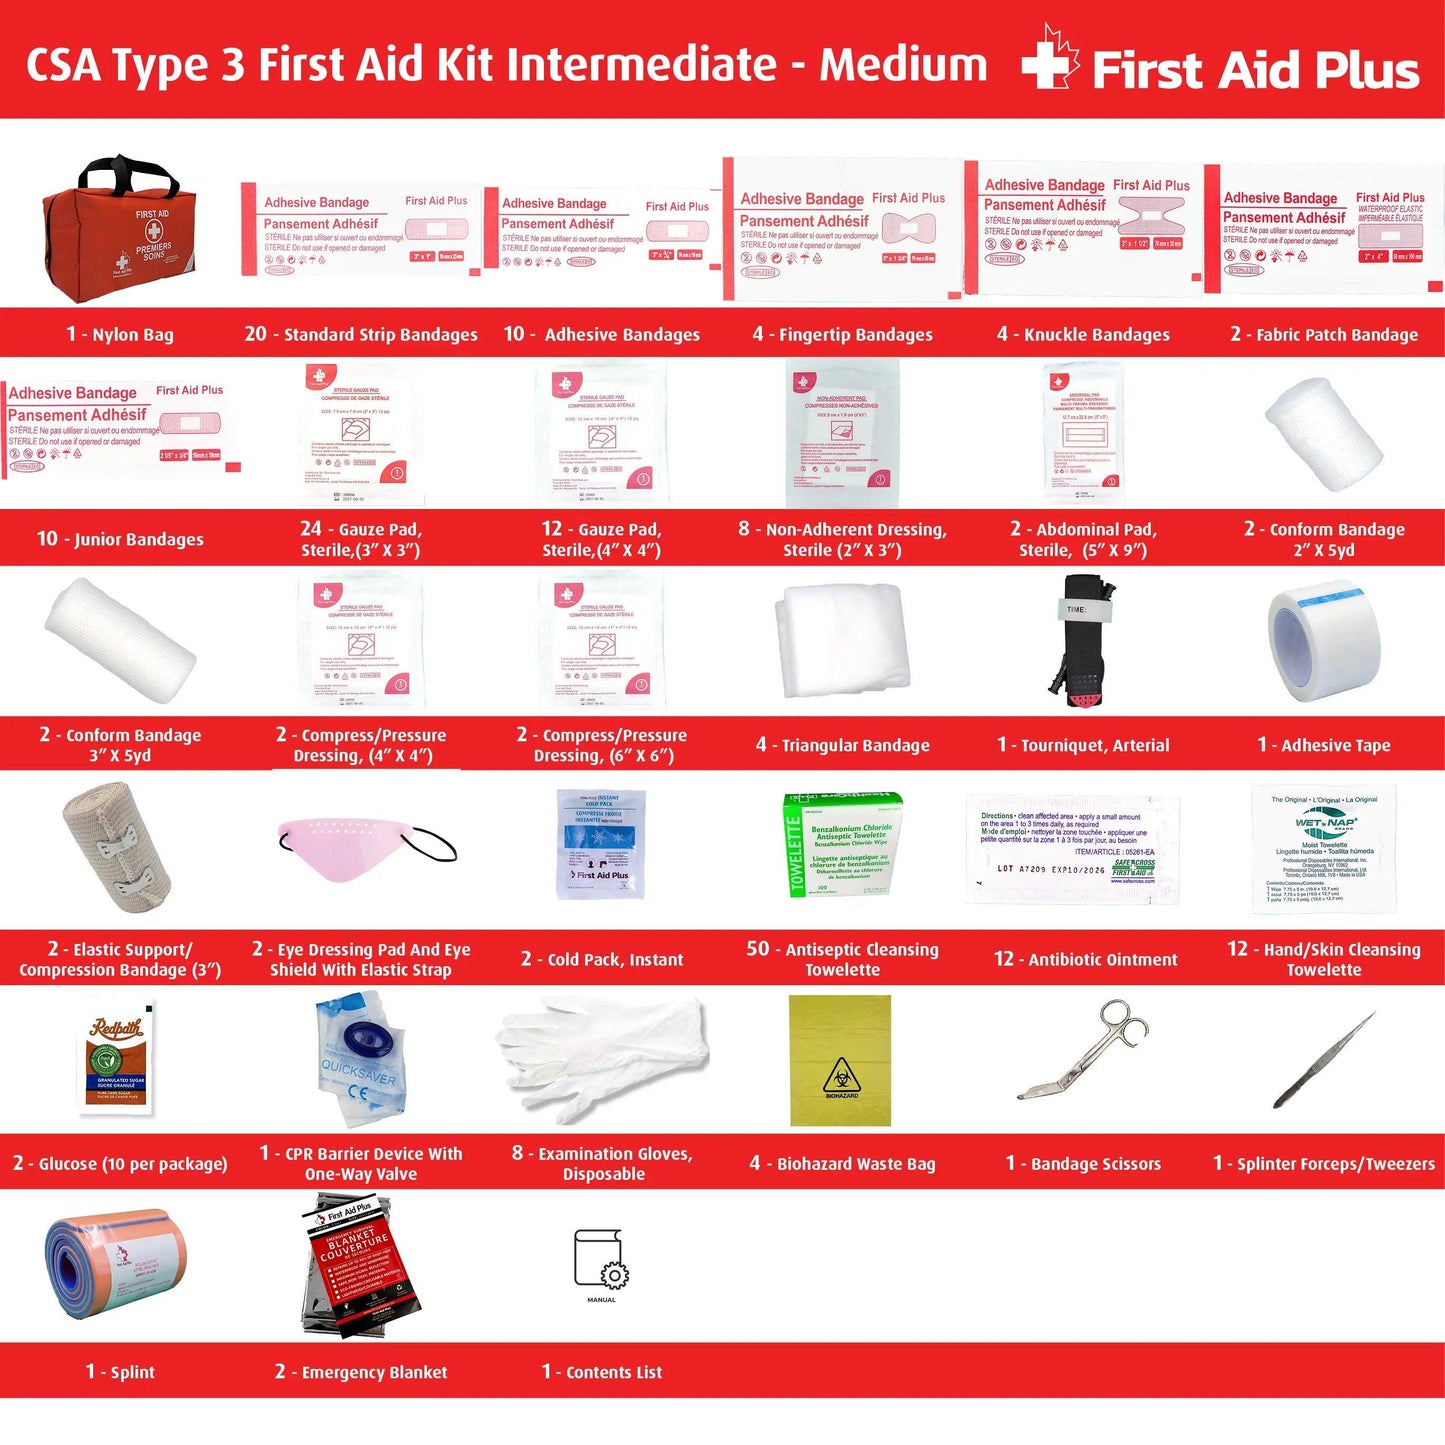 CSA Type 3 Intermediate First Aid Kit - Medium (26-50 Workers) First Aid Plus